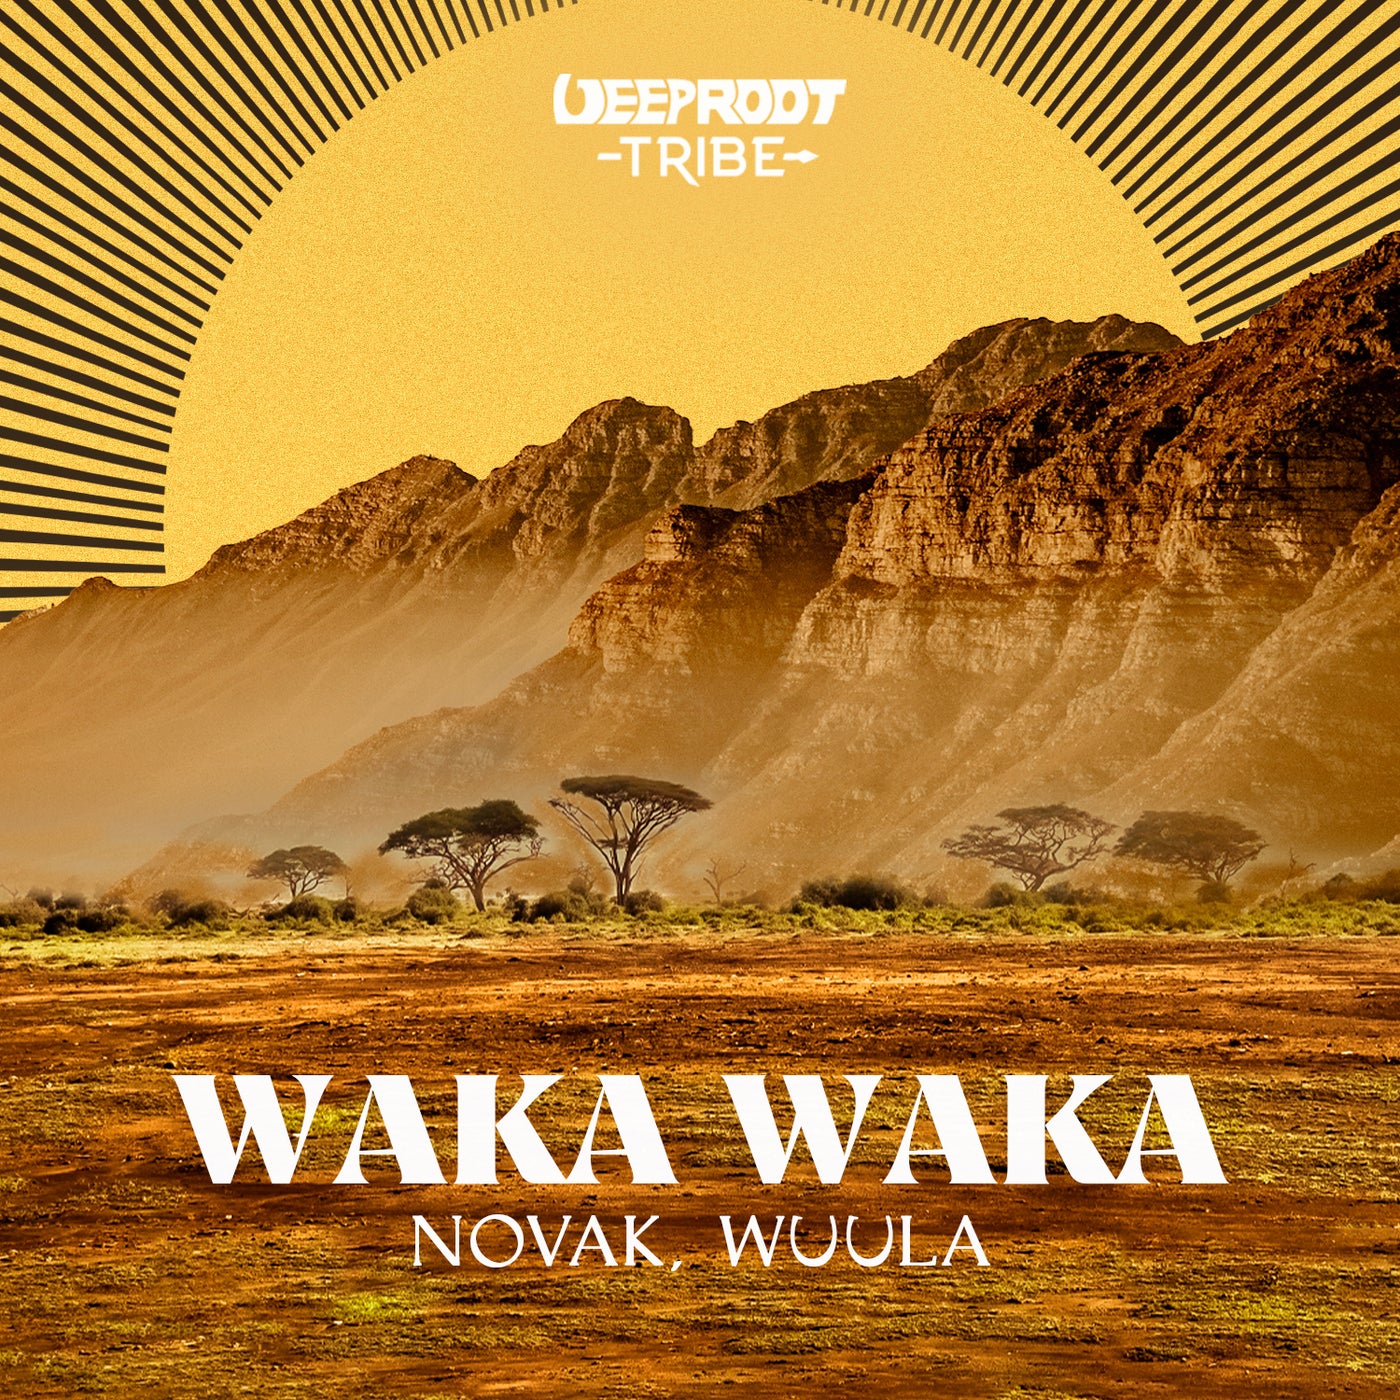 Cover - Novak, WUULA - Waka Waka (Extended Version)